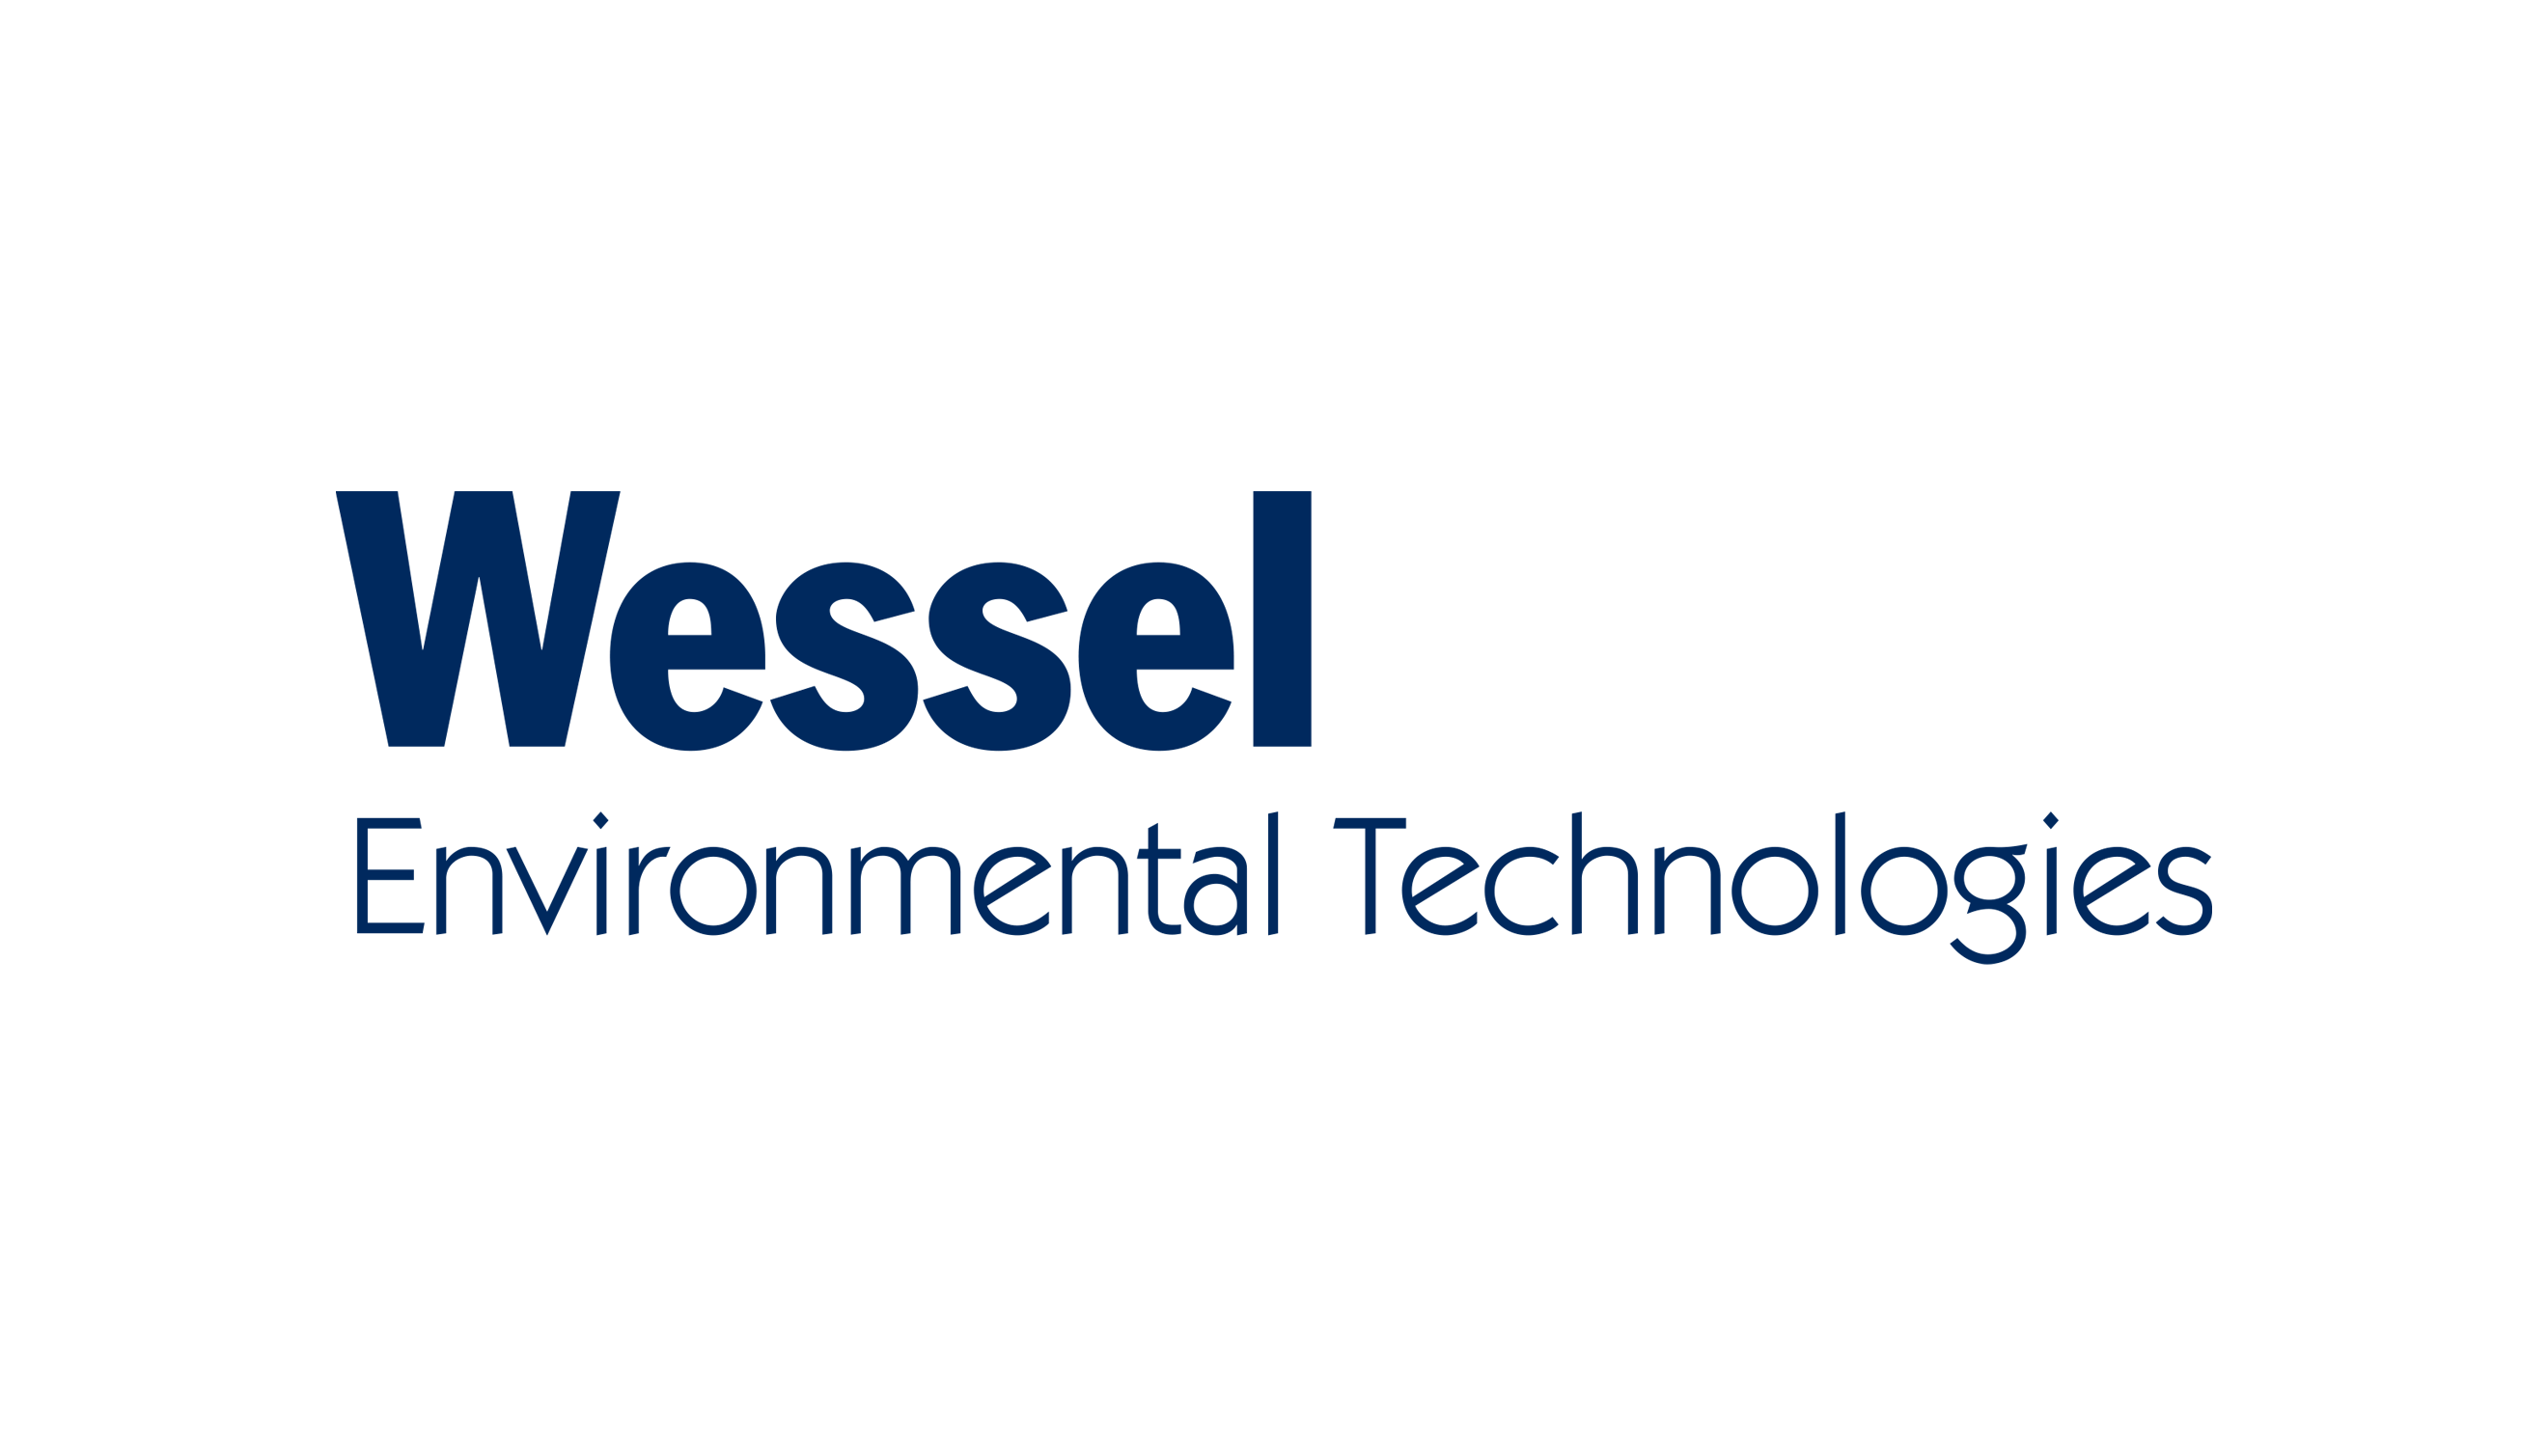 Logo Wessel